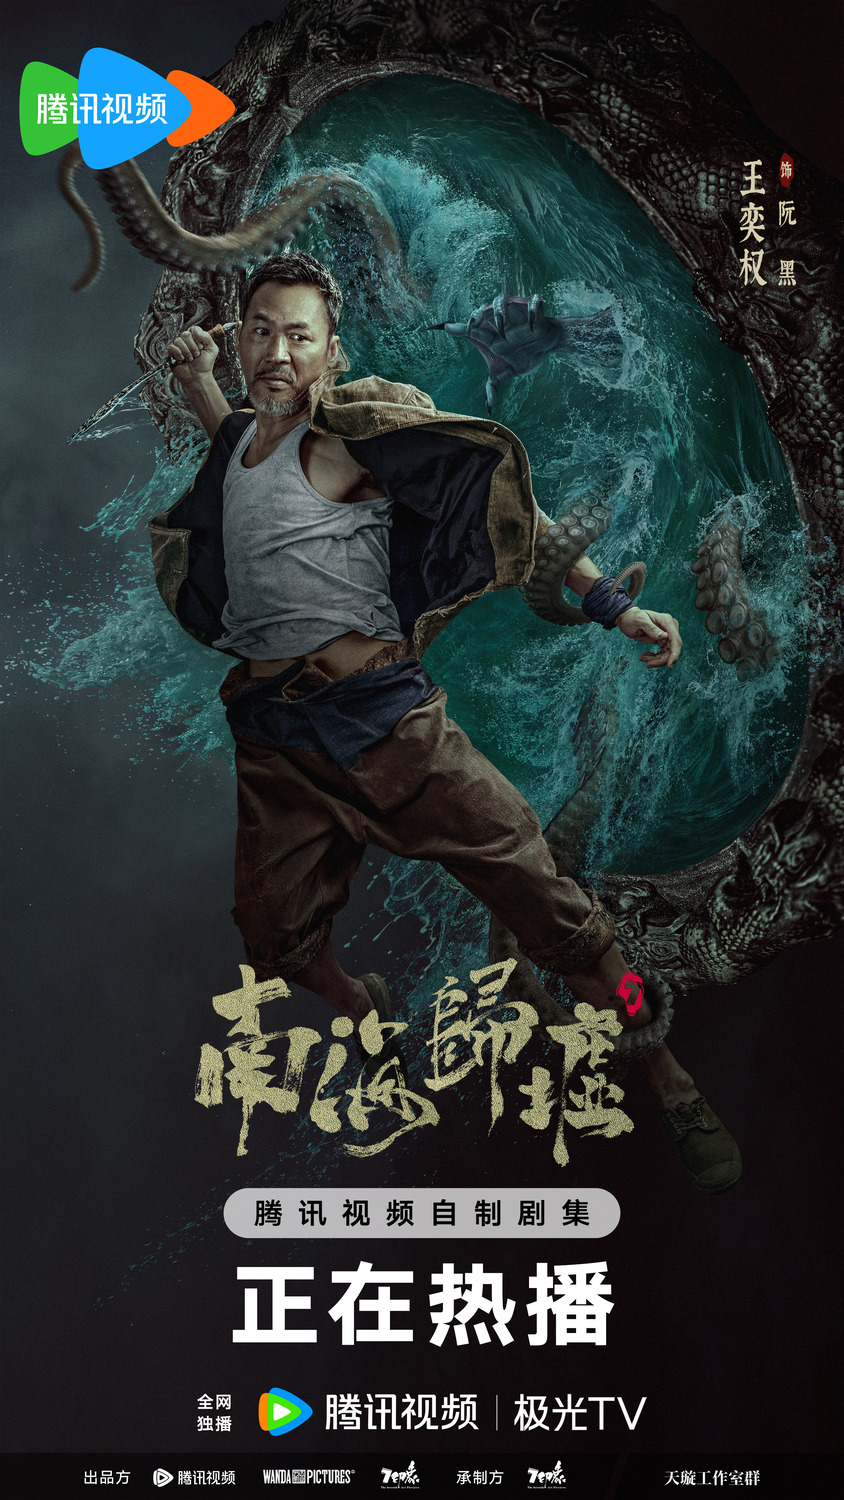 Extra Large TV Poster Image for Nan hai gui xu (#5 of 6)